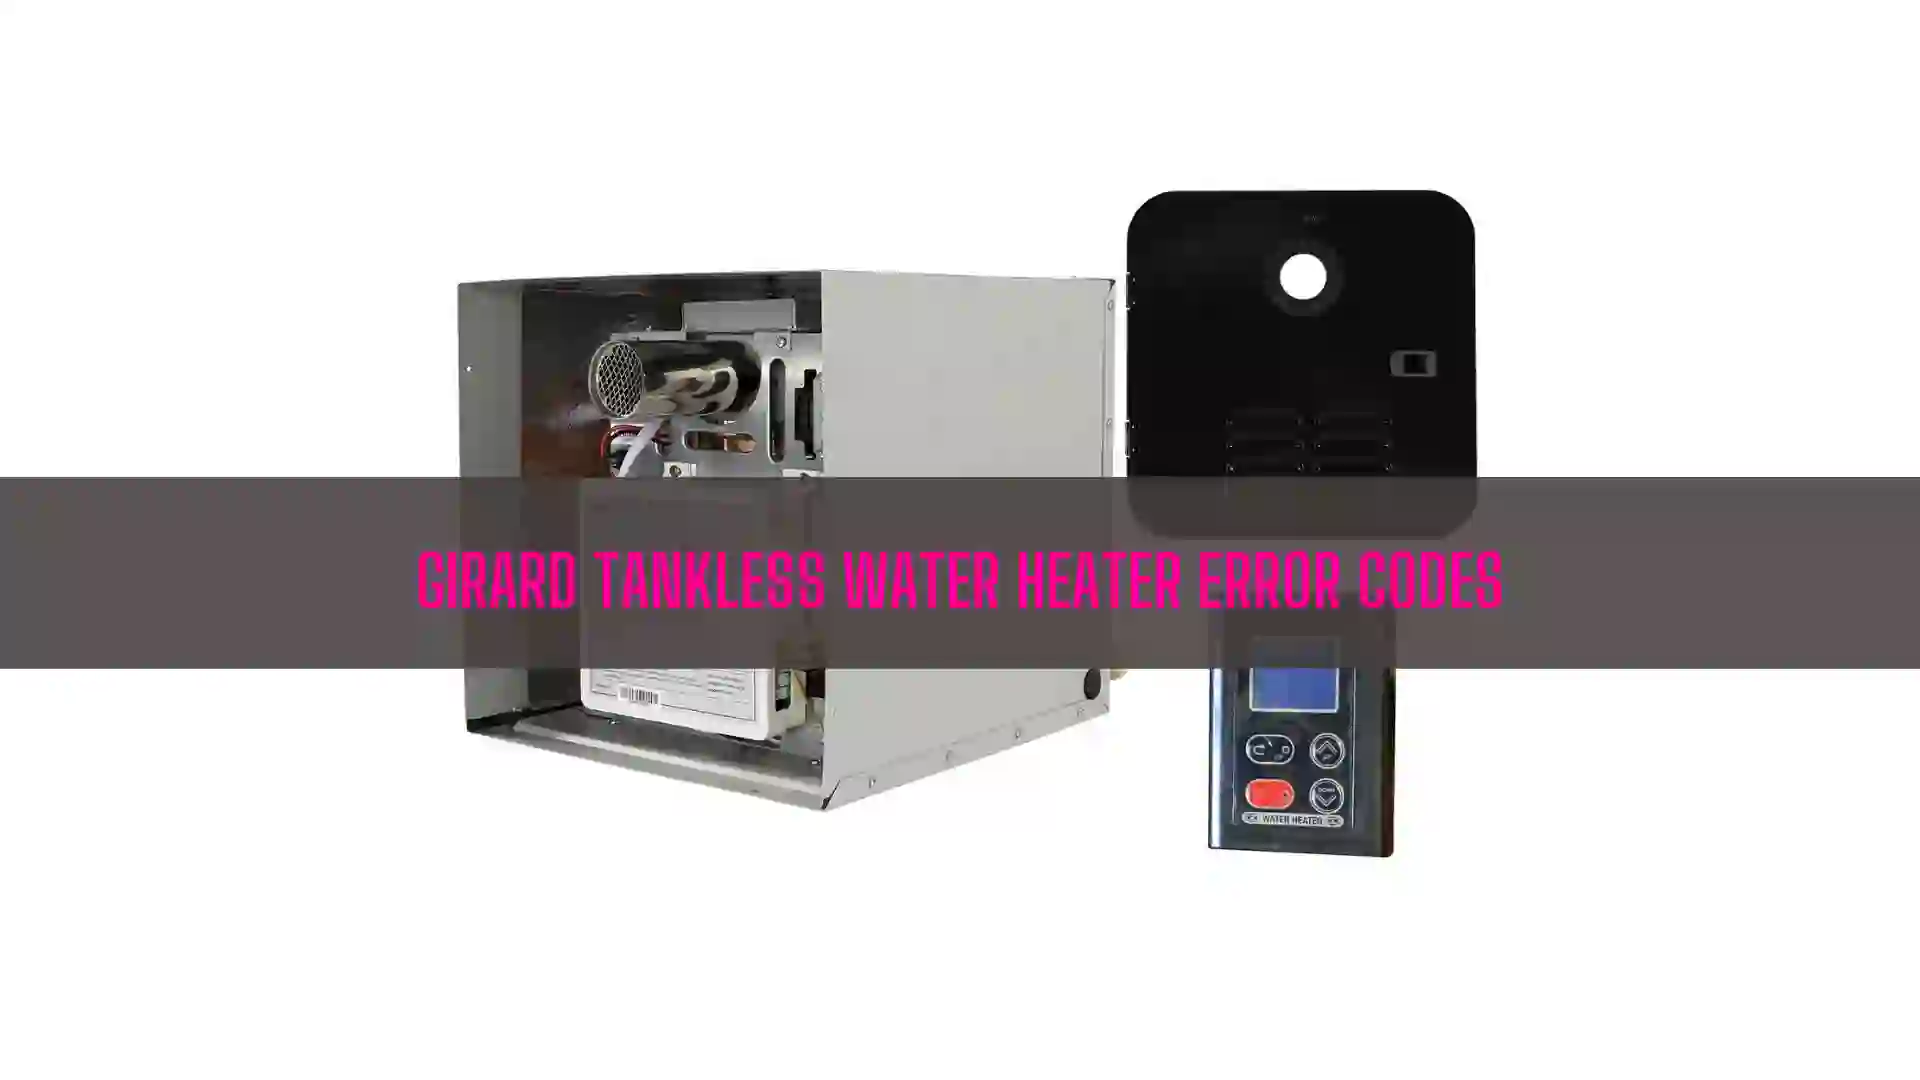 Girard Tankless Water Heater Error Codes